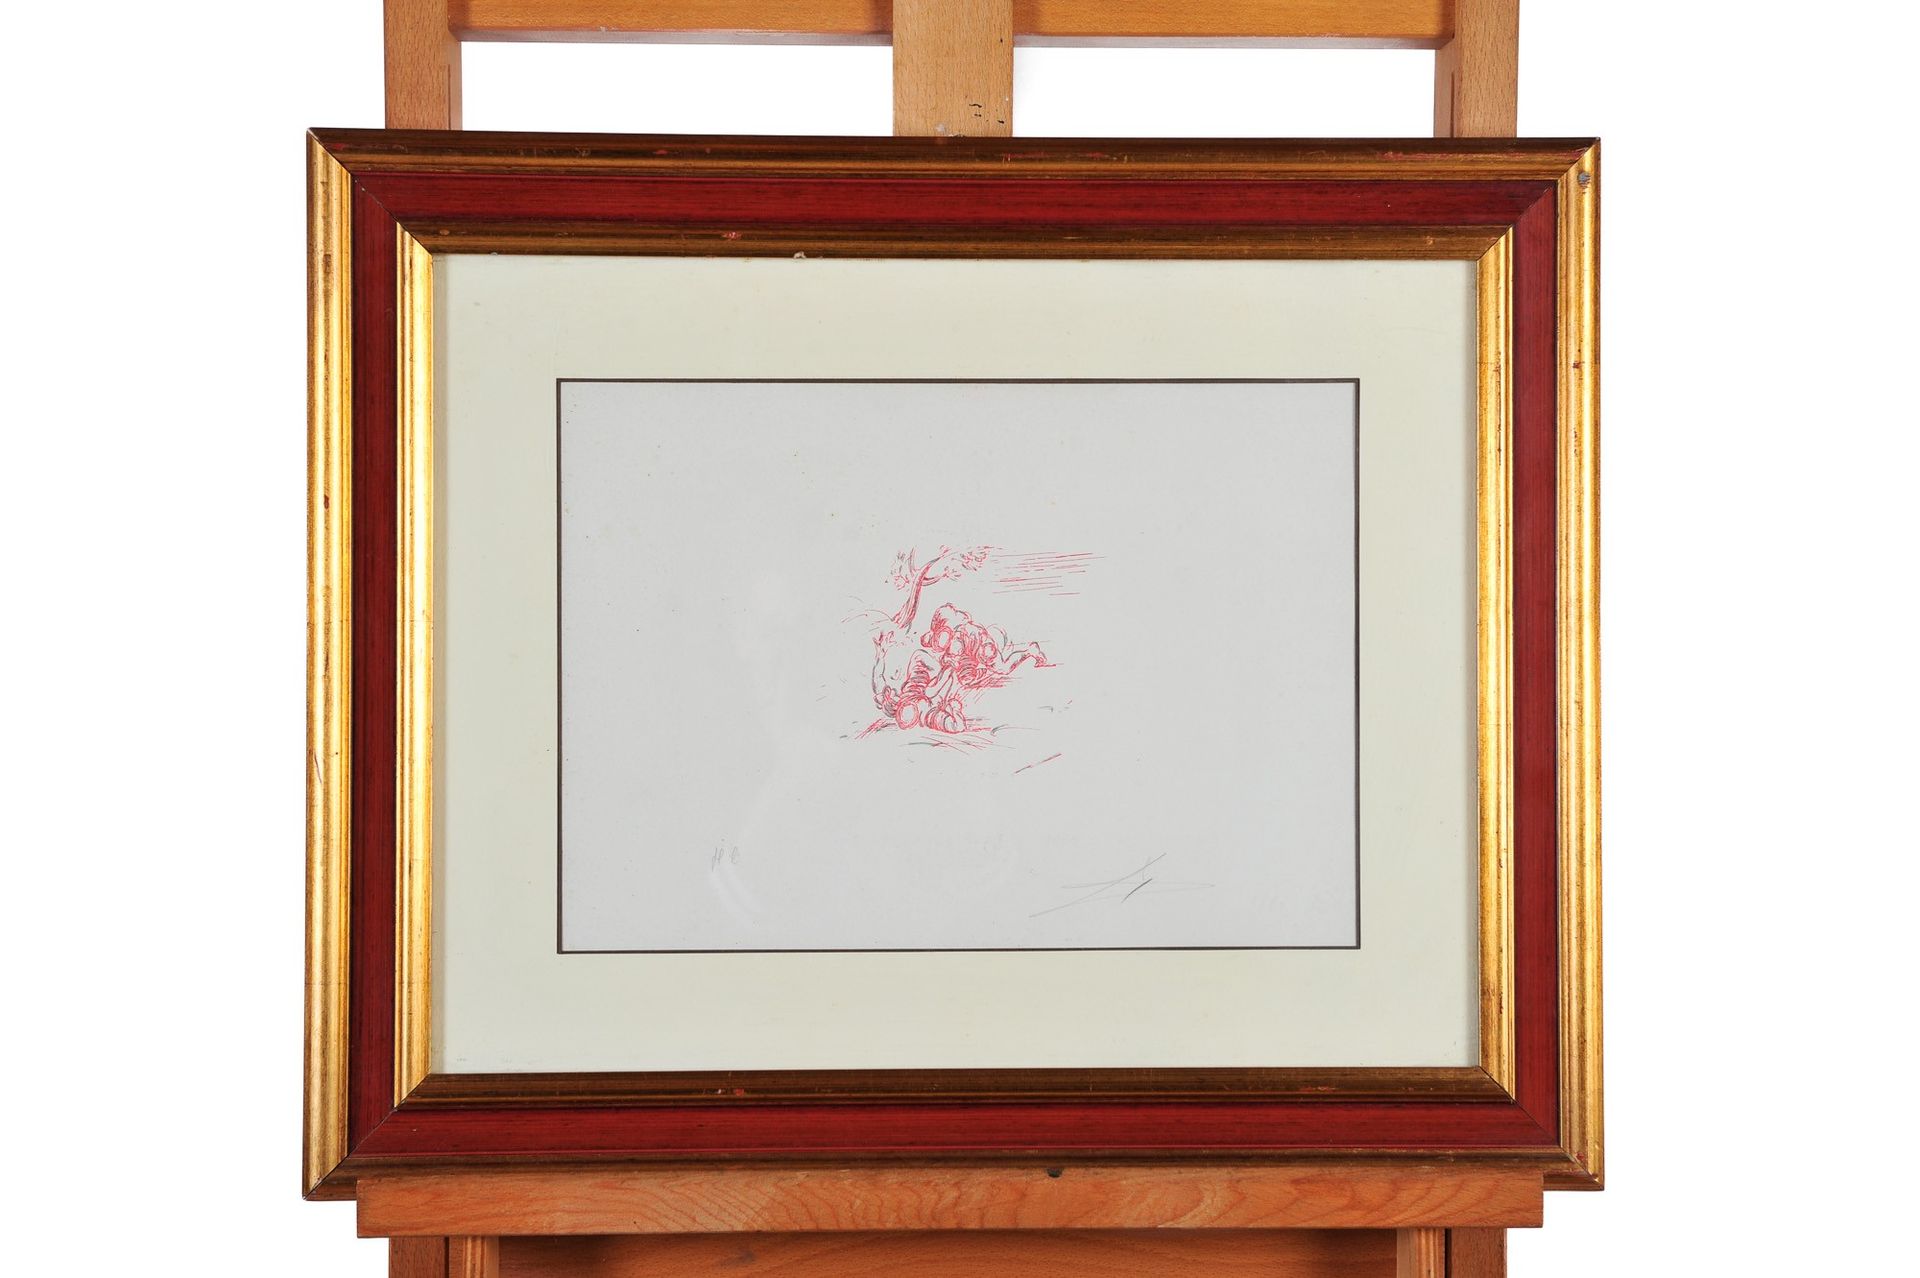 Salvador Dali - Wrestlers 纸上石版画 
25 x 34厘米
在框架内。